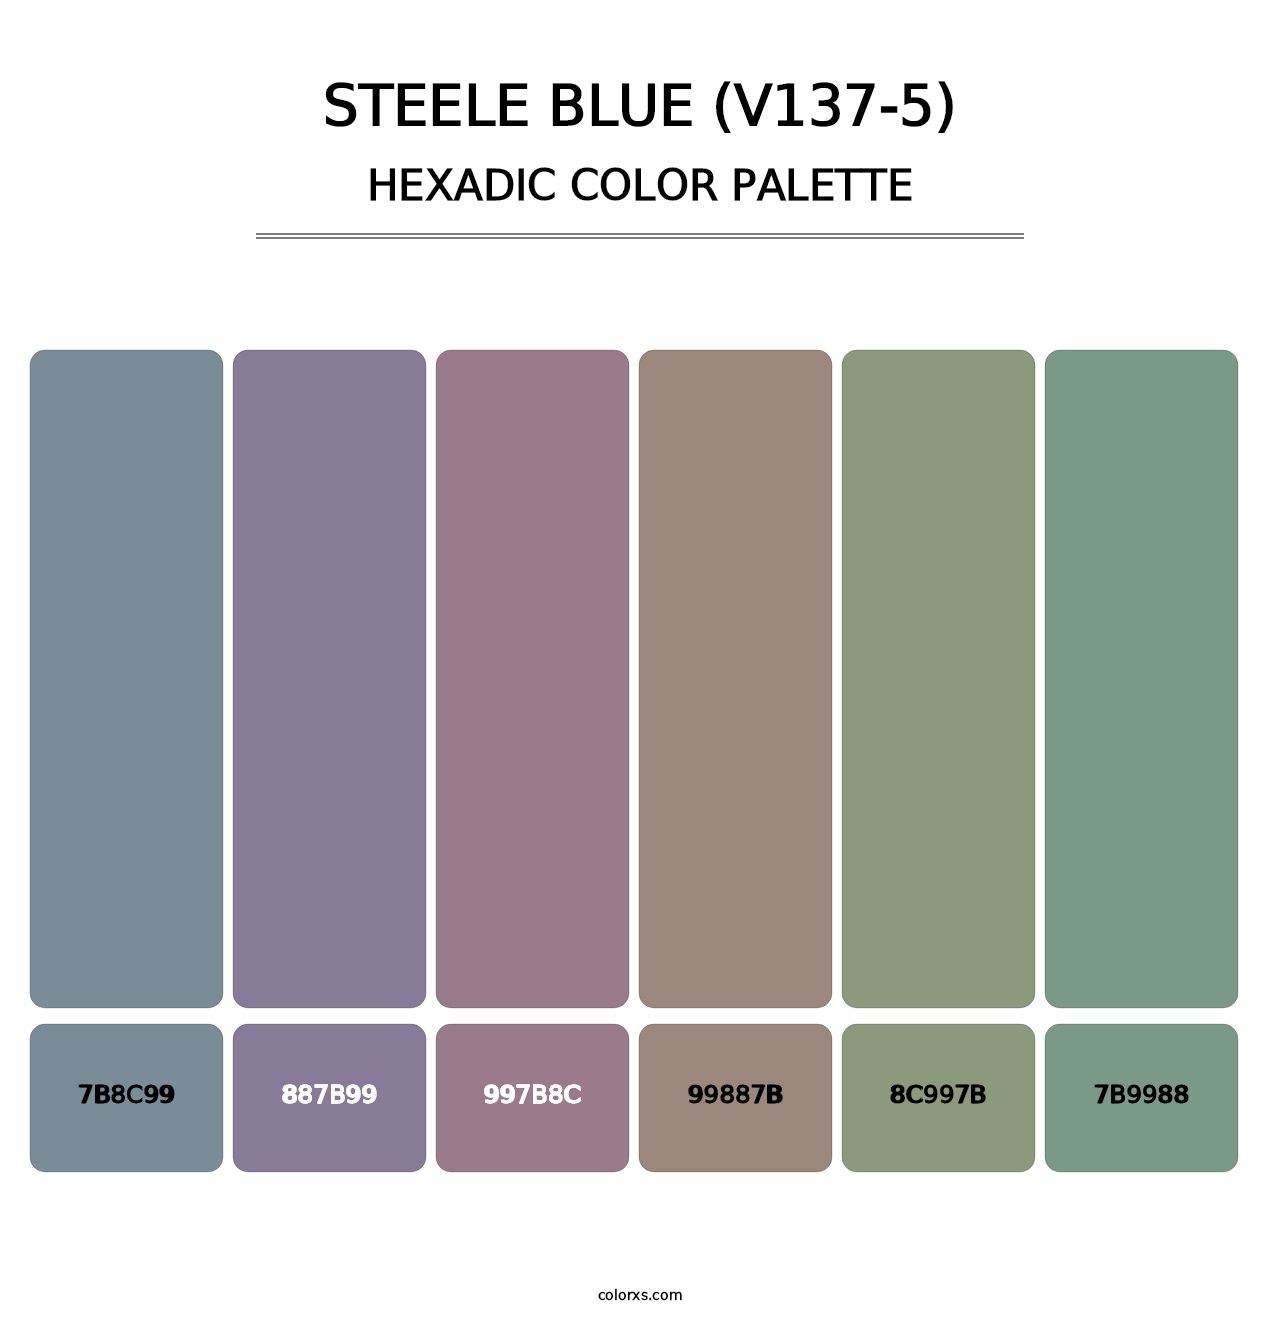 Steele Blue (V137-5) - Hexadic Color Palette